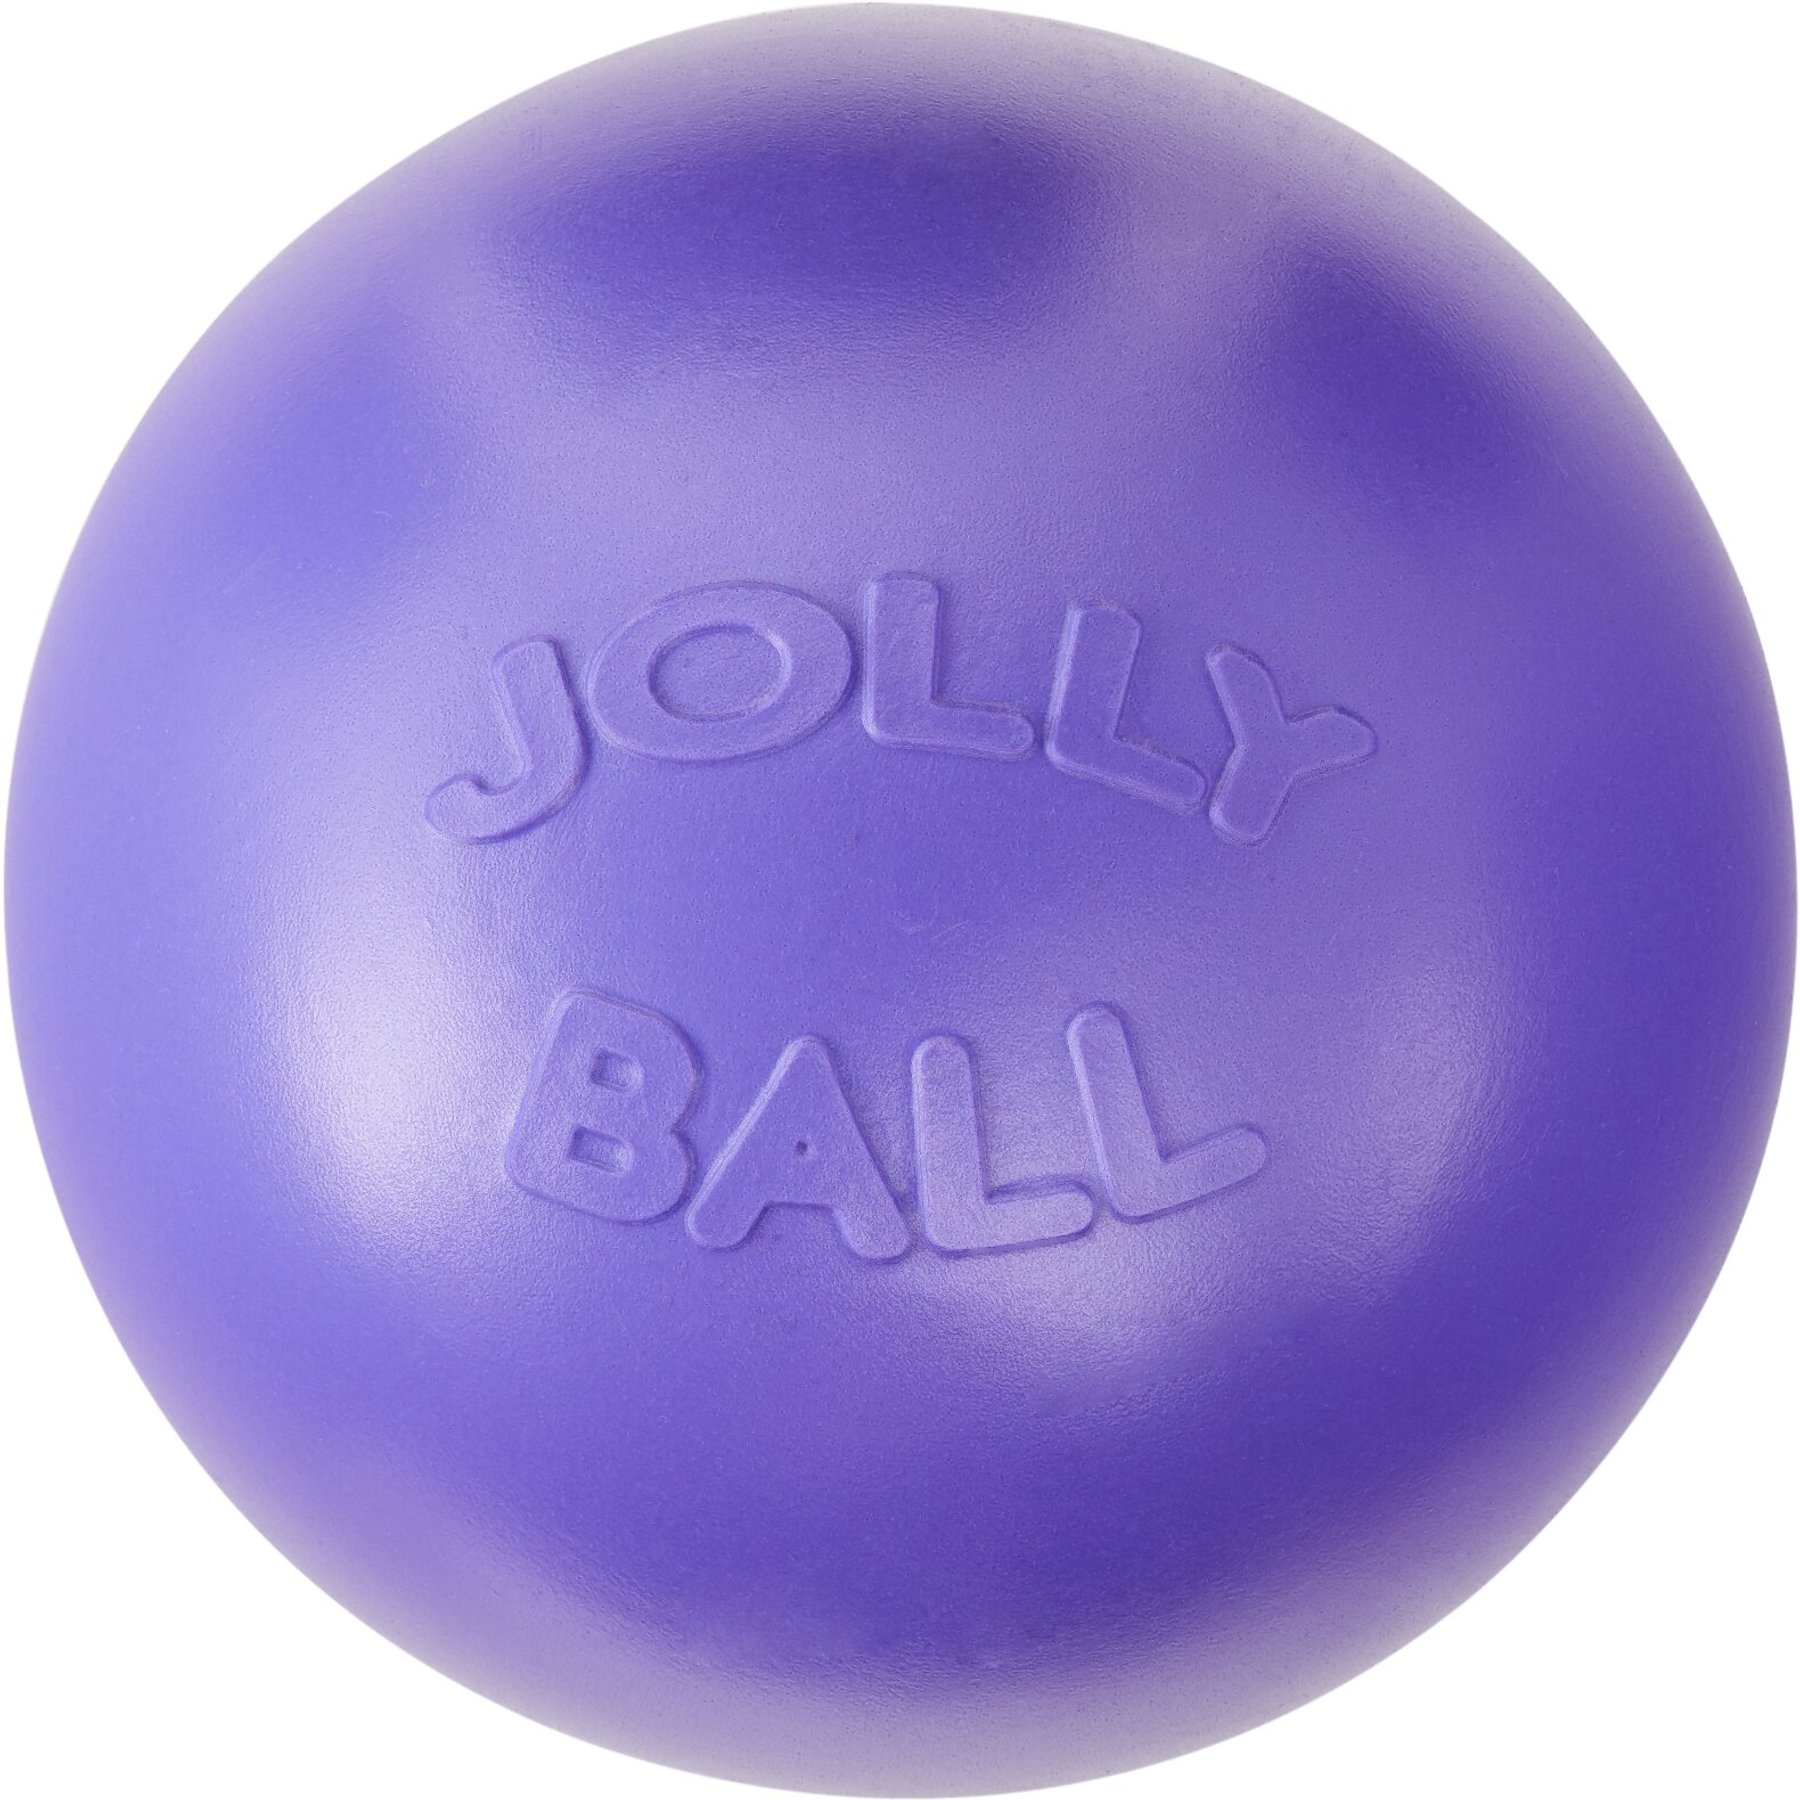 Jolly Pets 10 Push N Play Ball Dog Toy